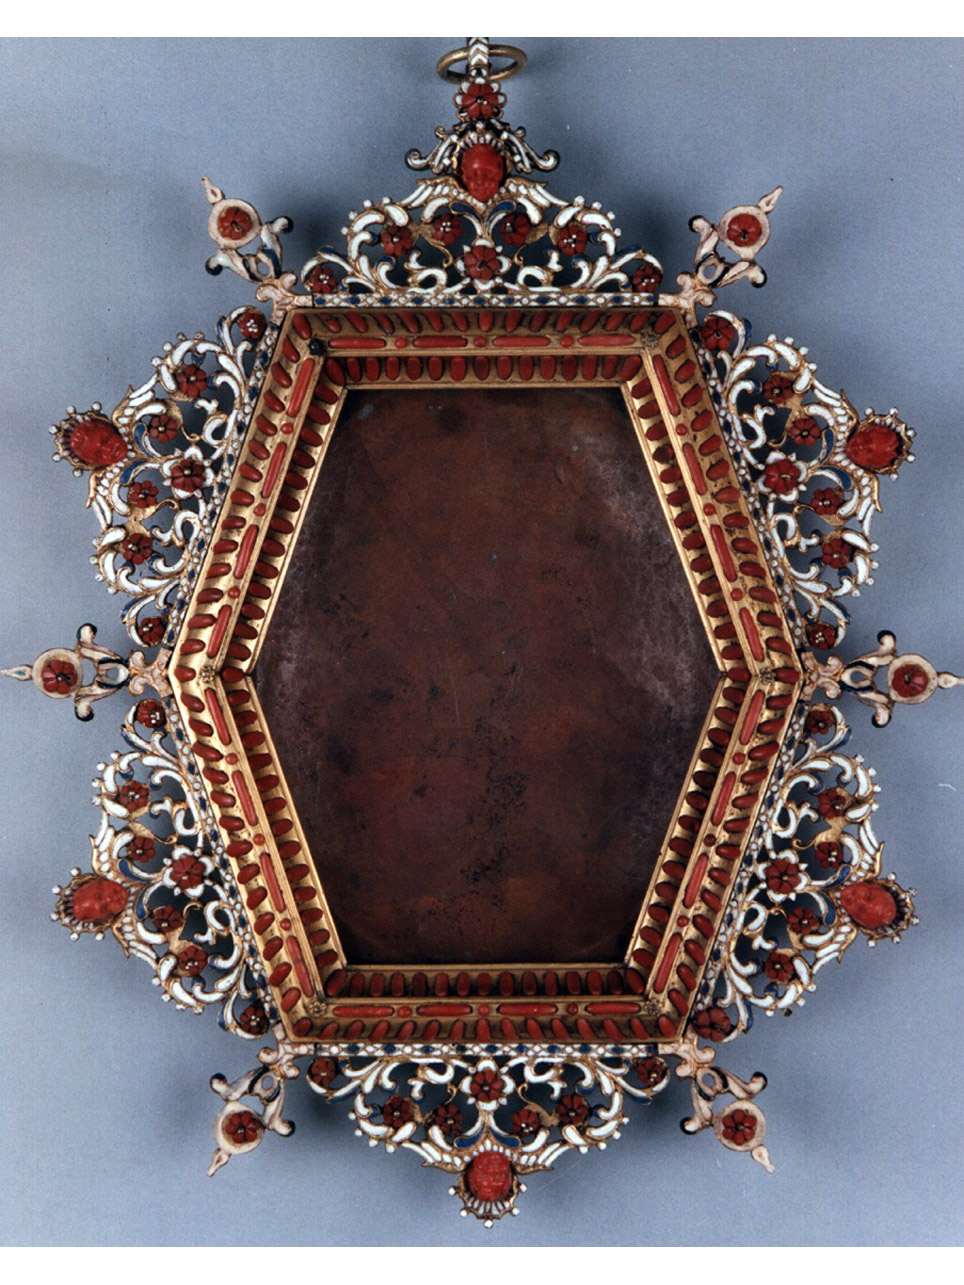 cherubini e motivi decorativi fitomorfi/ Sant'Antonio da Padova (cornice) - bottega trapanese (sec. XVII)